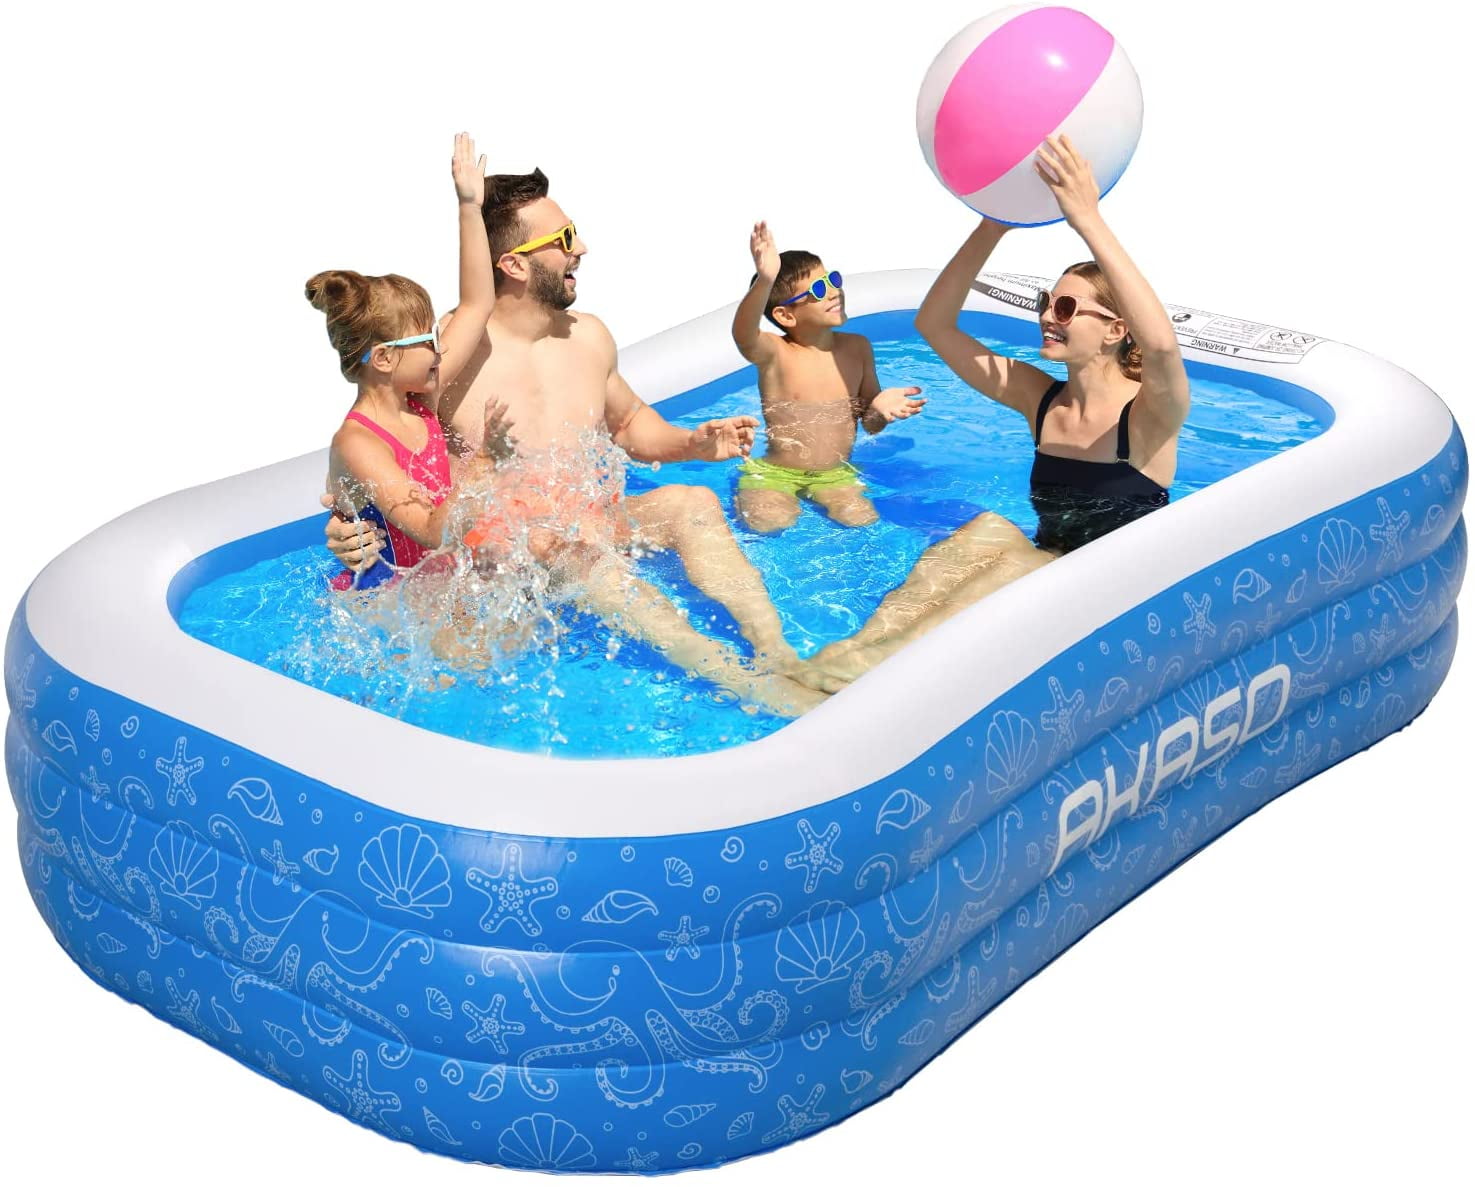 Intex Swim Center Family Lounge Inflatable Pool, 90